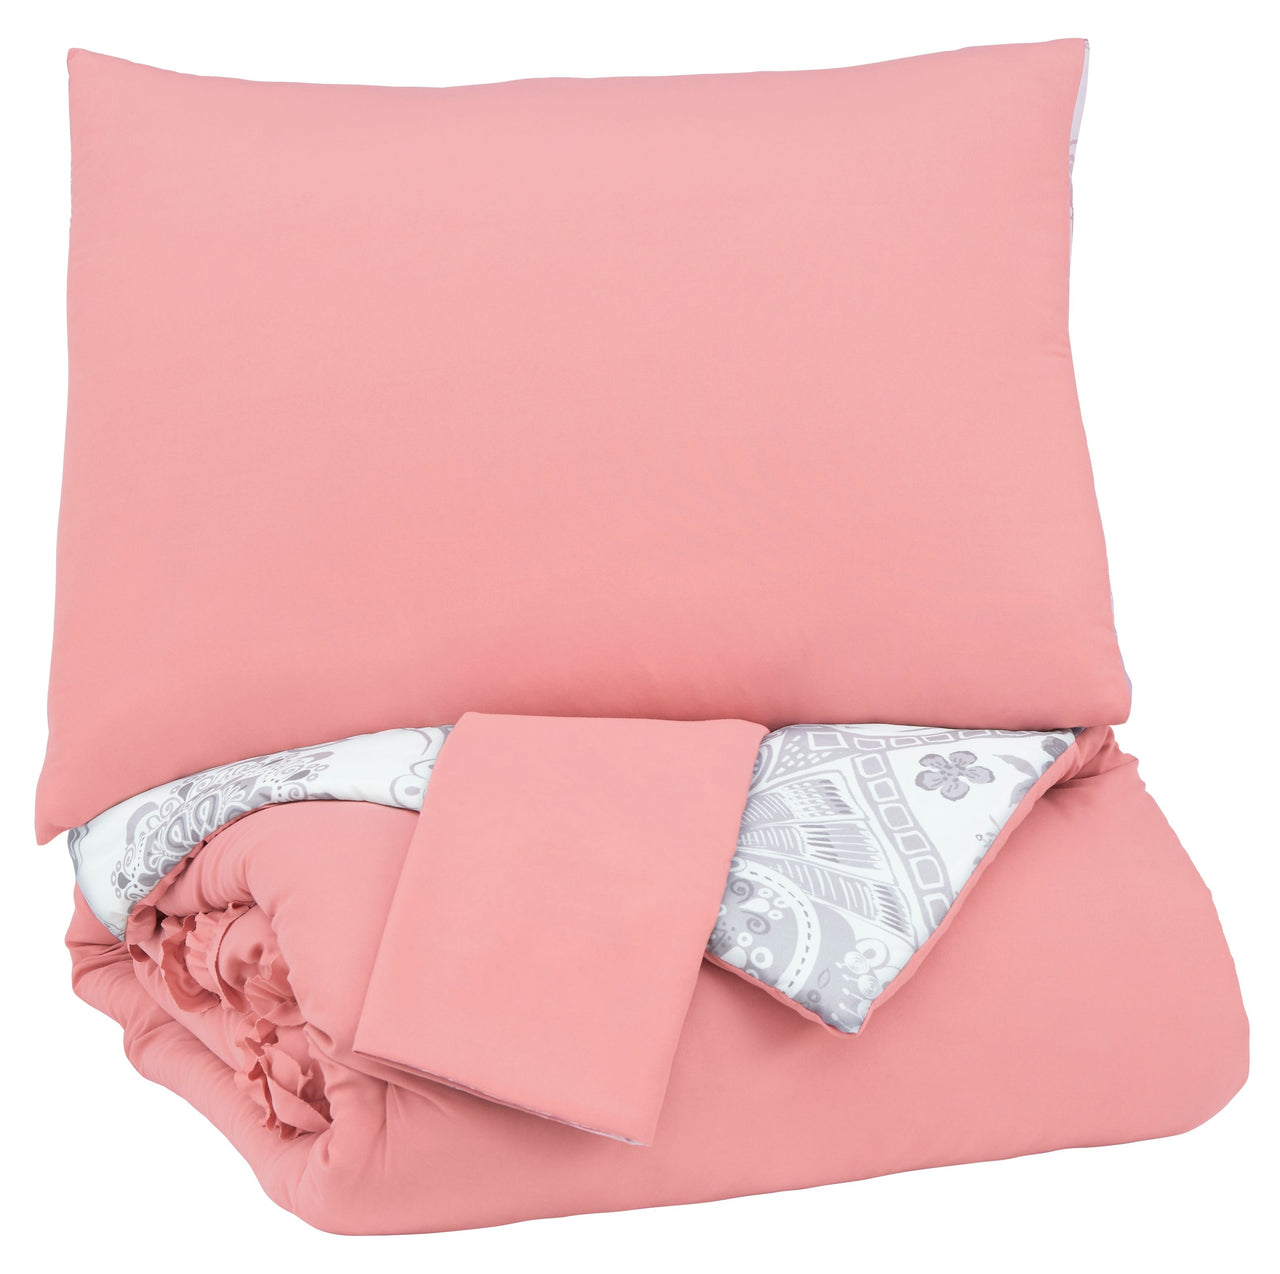 Avaleigh - Comforter Set - Tony's Home Furnishings